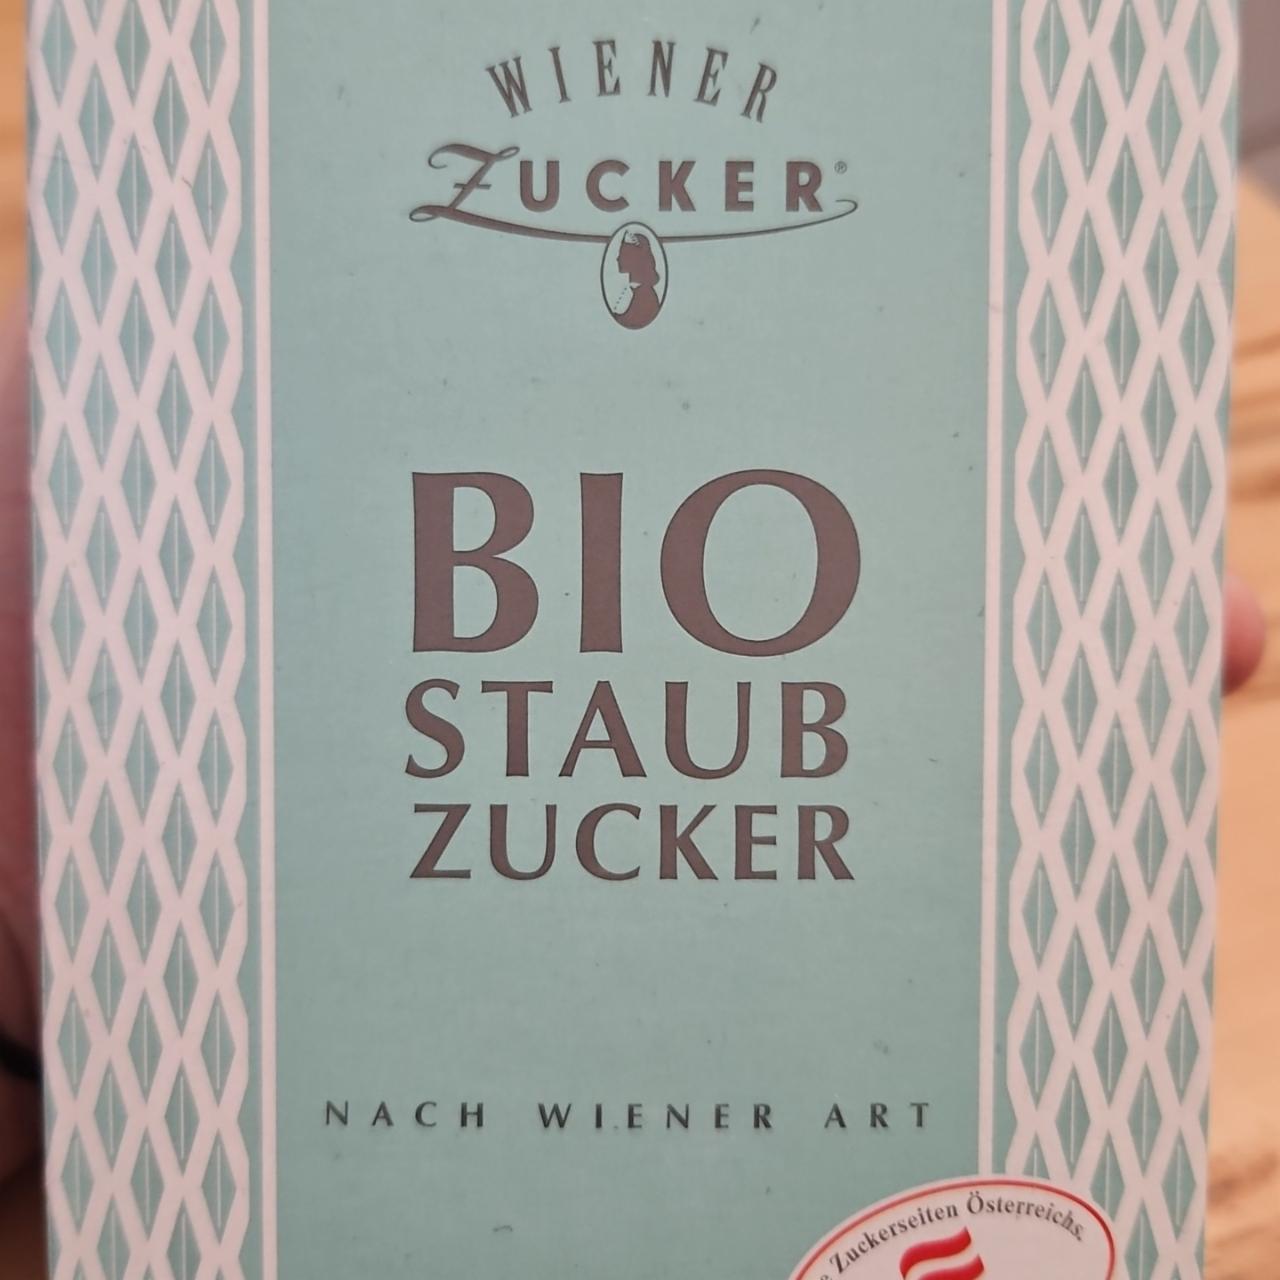 Fotografie - Bio Staub Zuckej Wiener Zucker